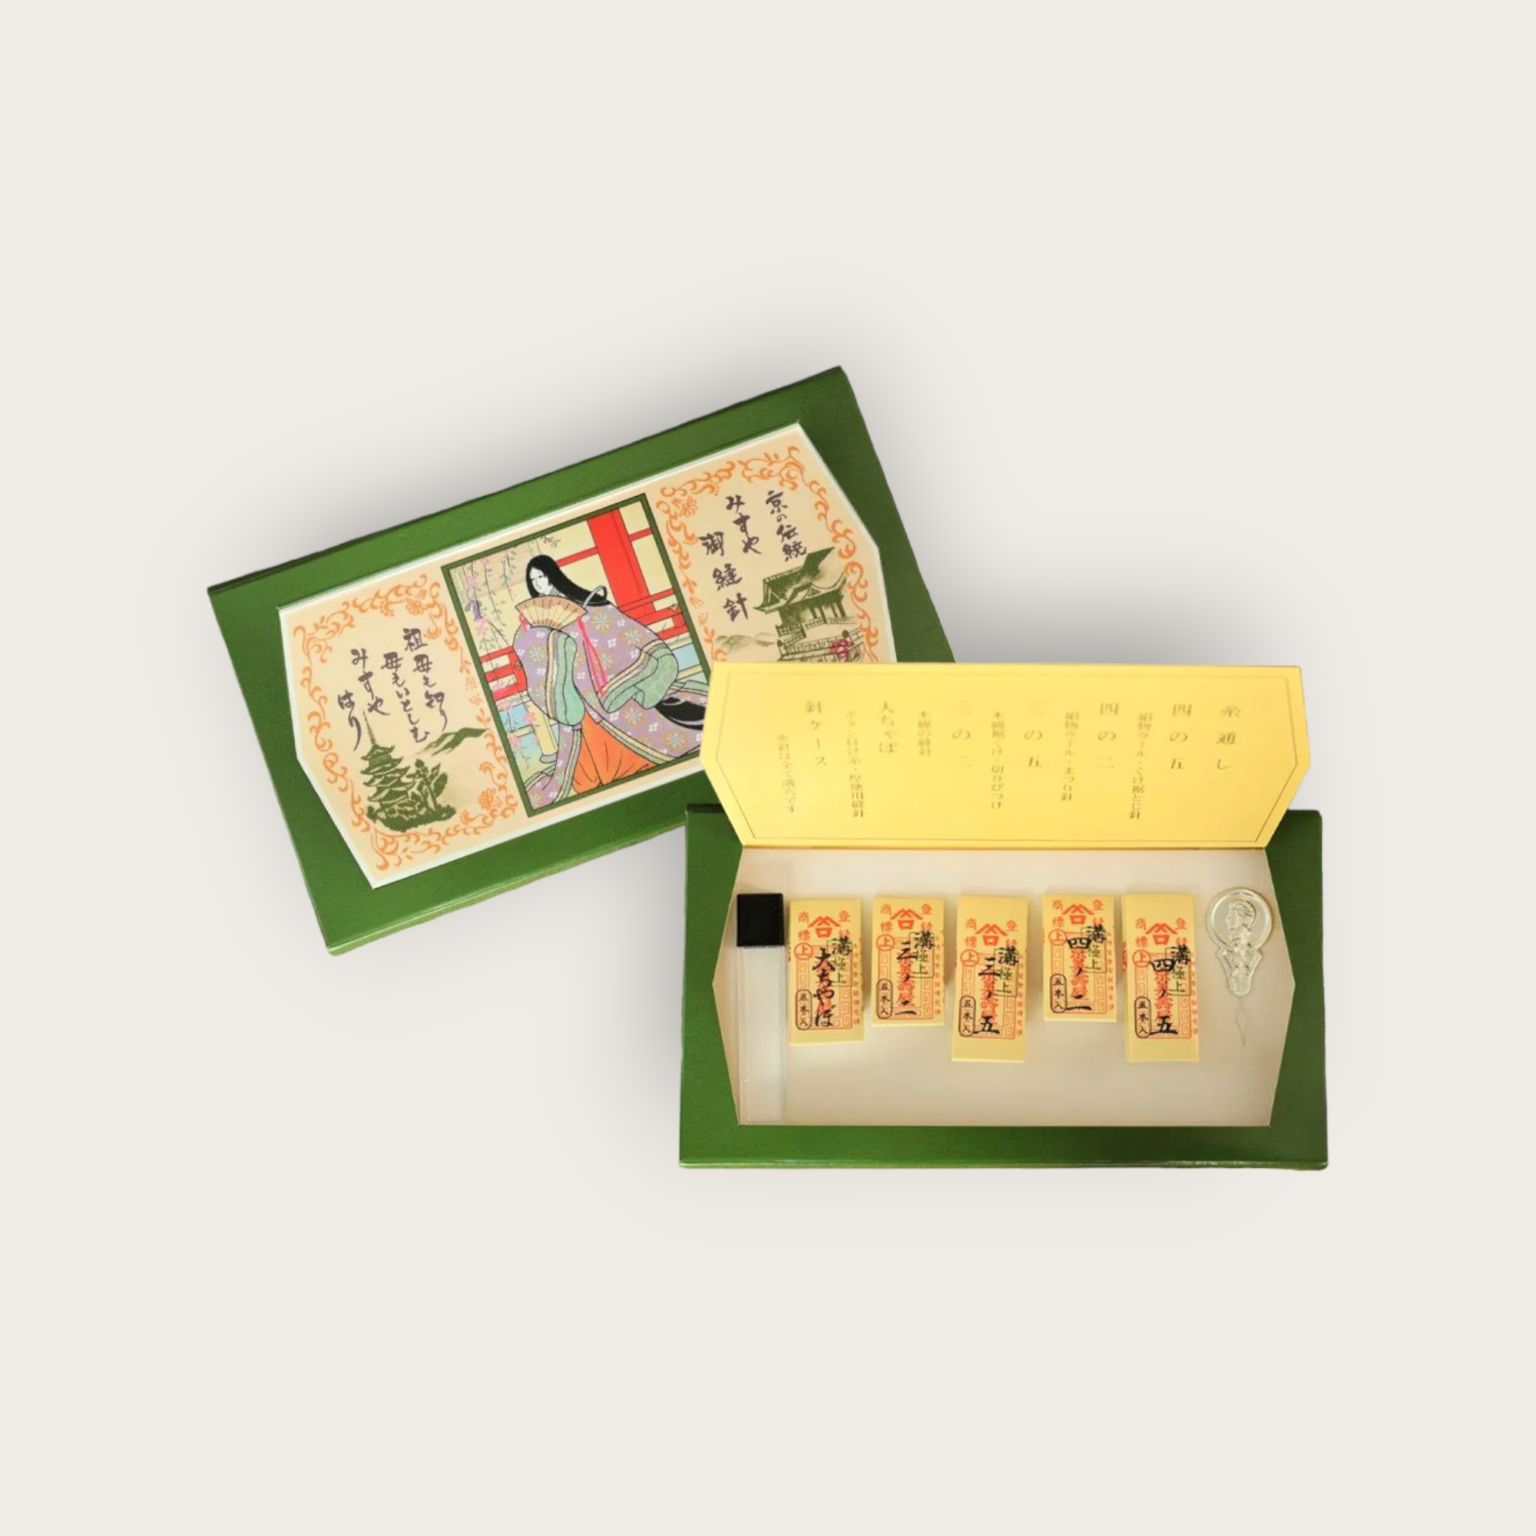 Misuya Chubei - Assorted needles in special reprinted box - Eight Needles